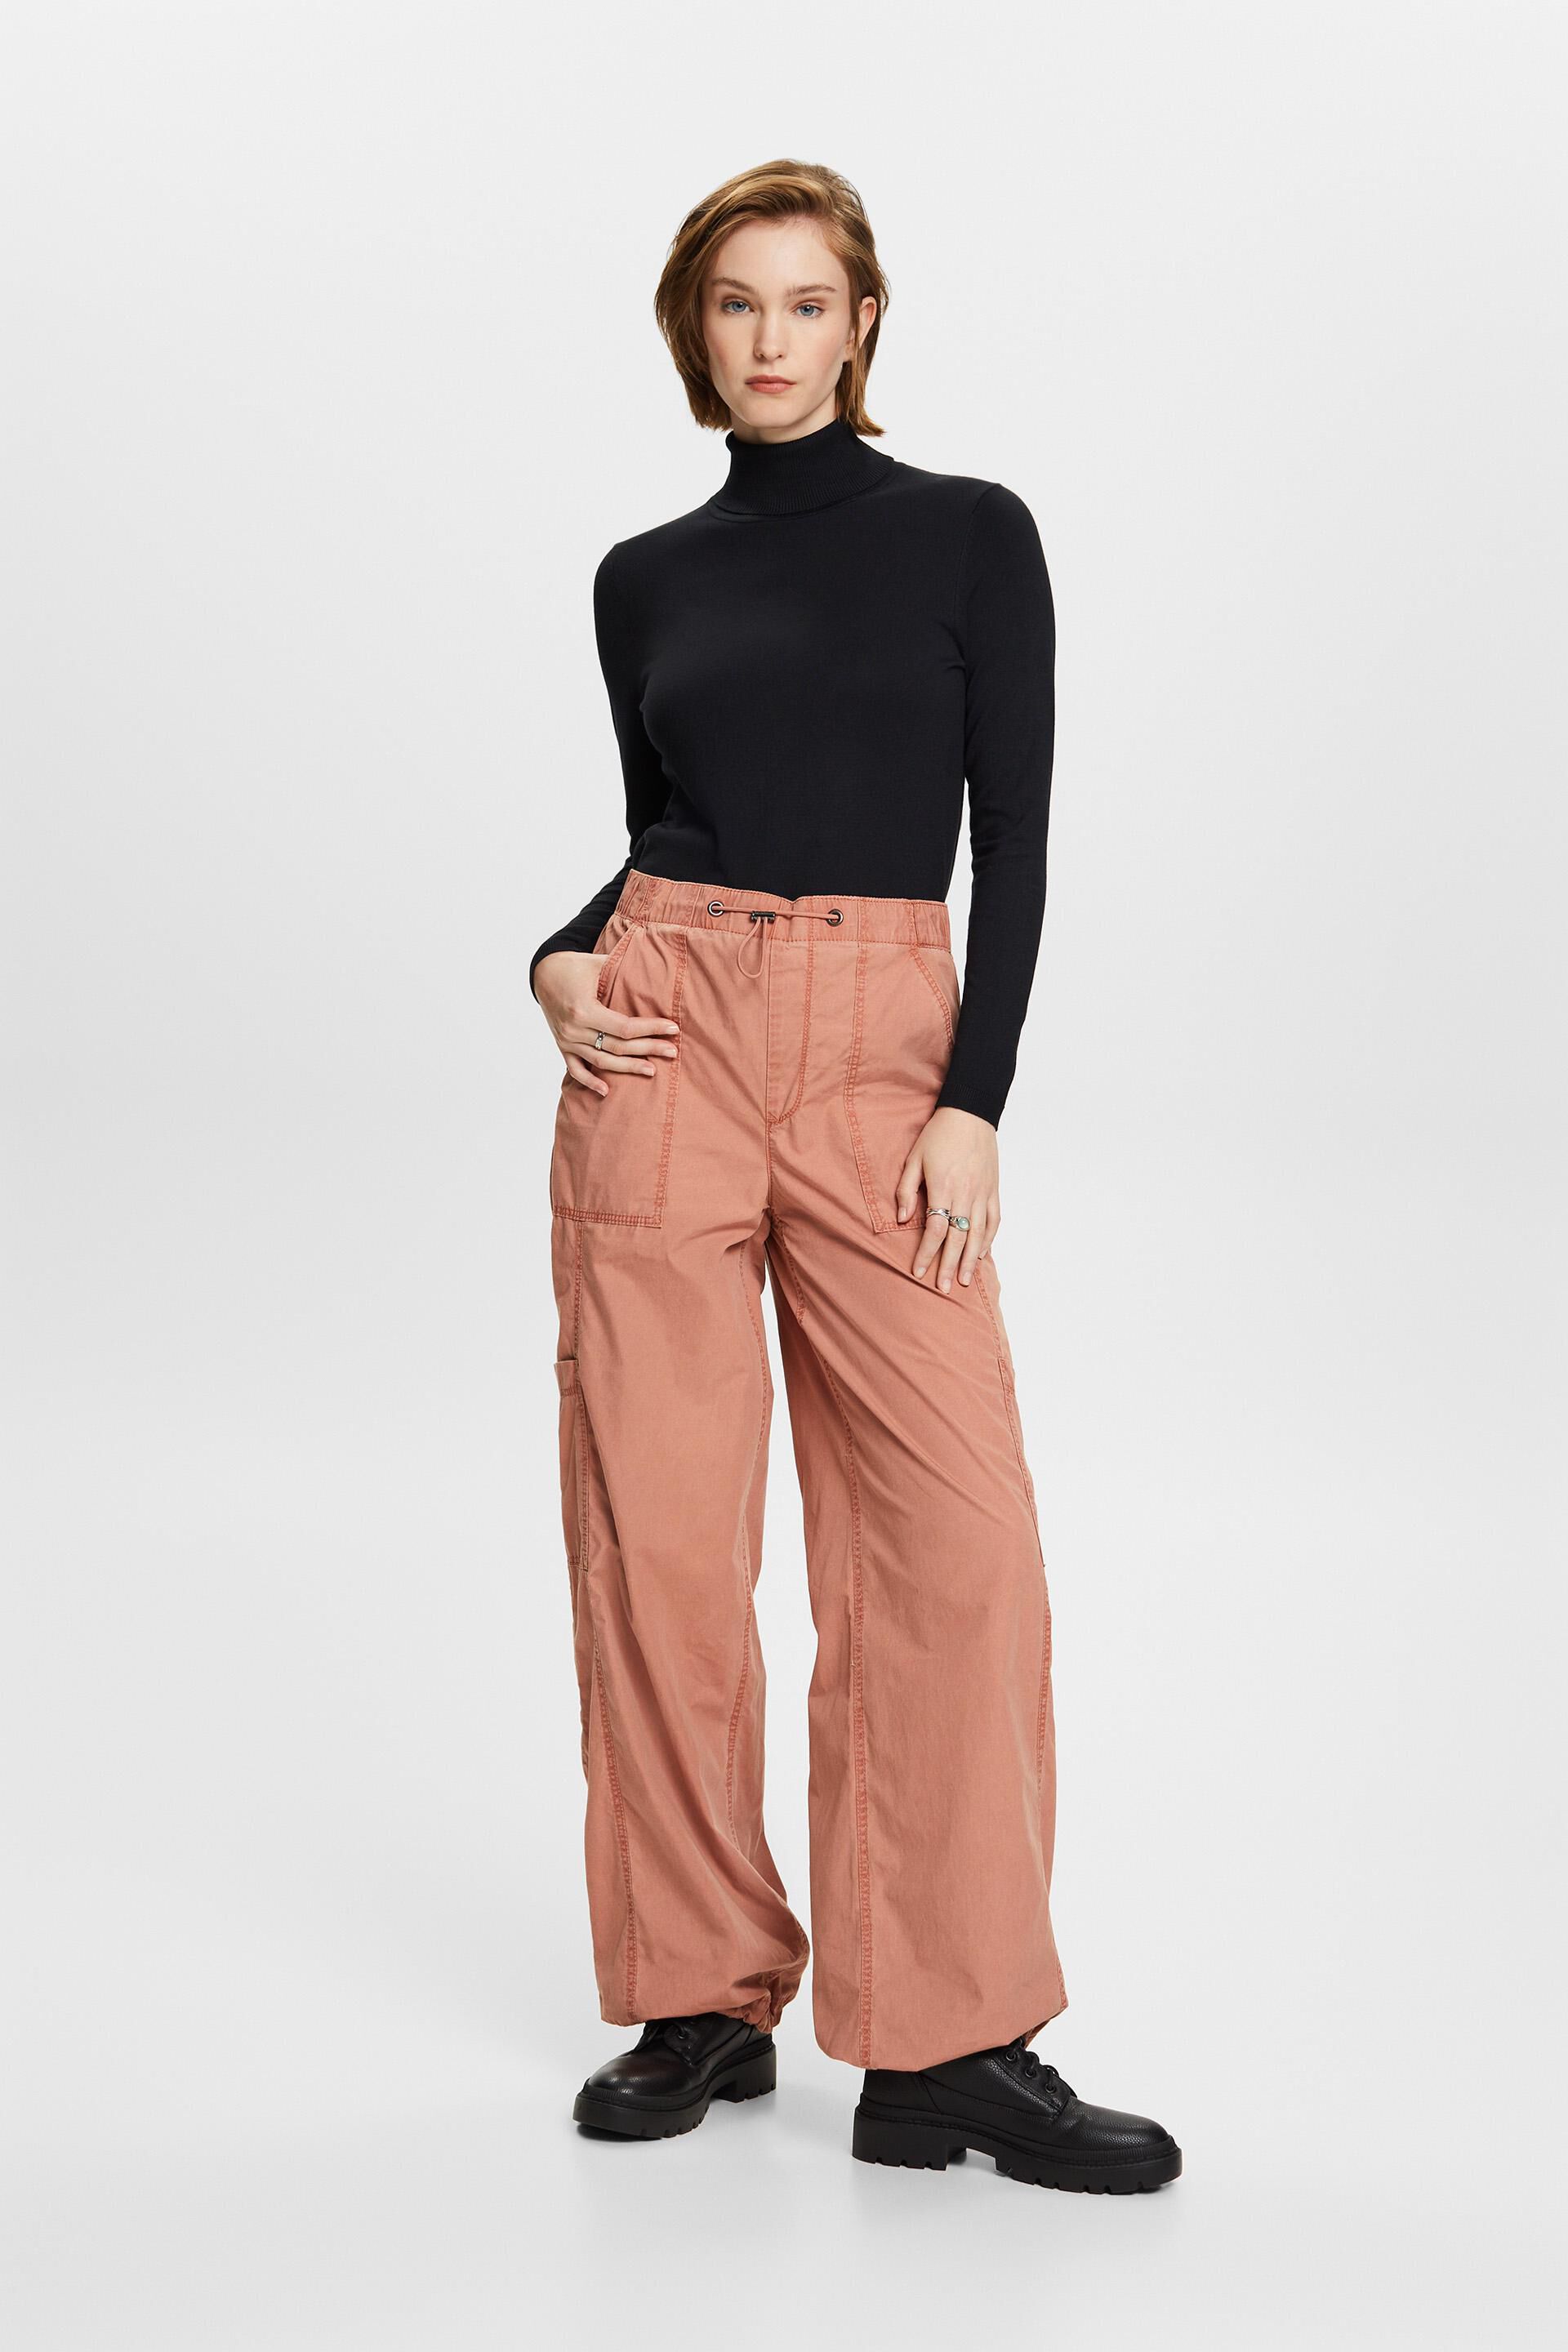 Esprit Damen Pull-on cargo trousers, 100% cotton